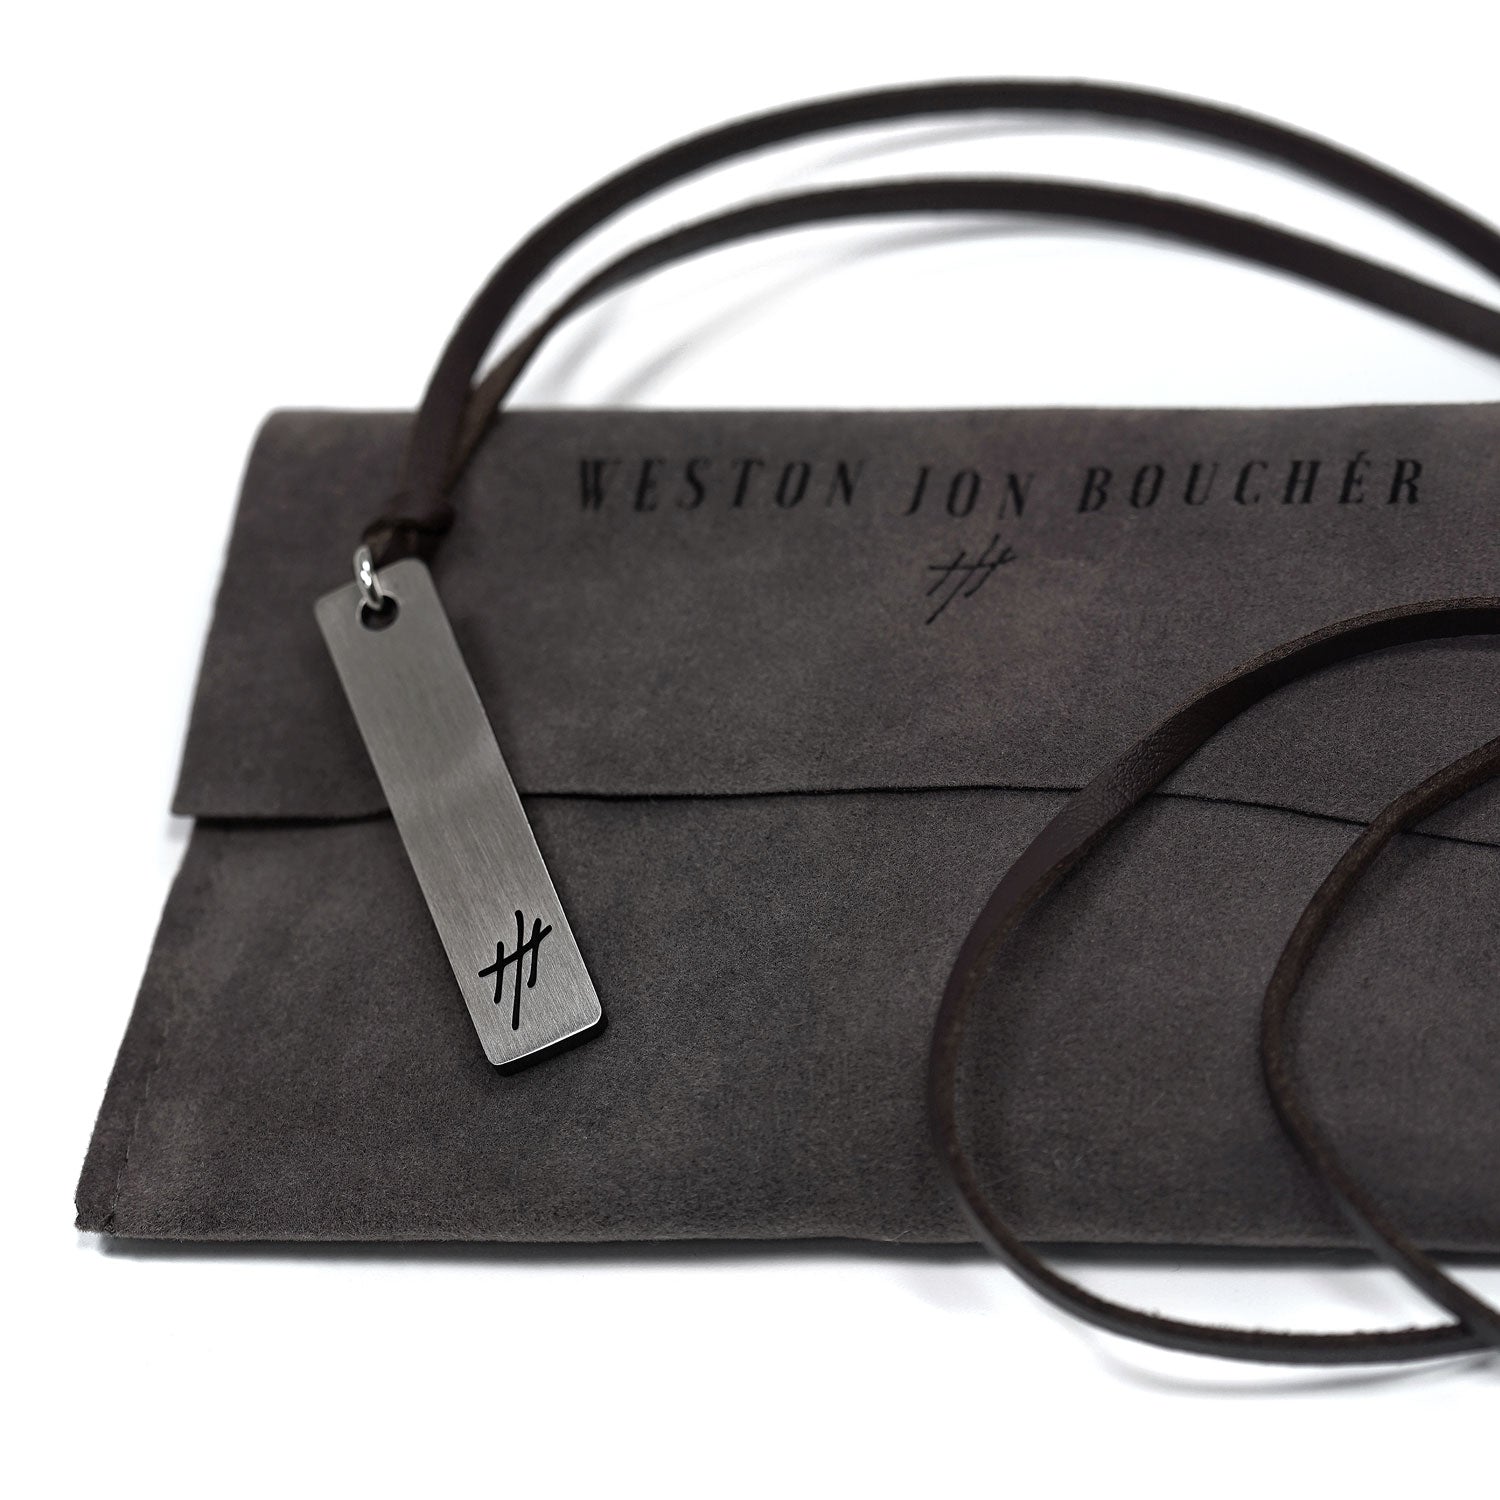 Reversible Stainless Steel Pendant Leather Necklace - WESTON JON BOUCHÉR